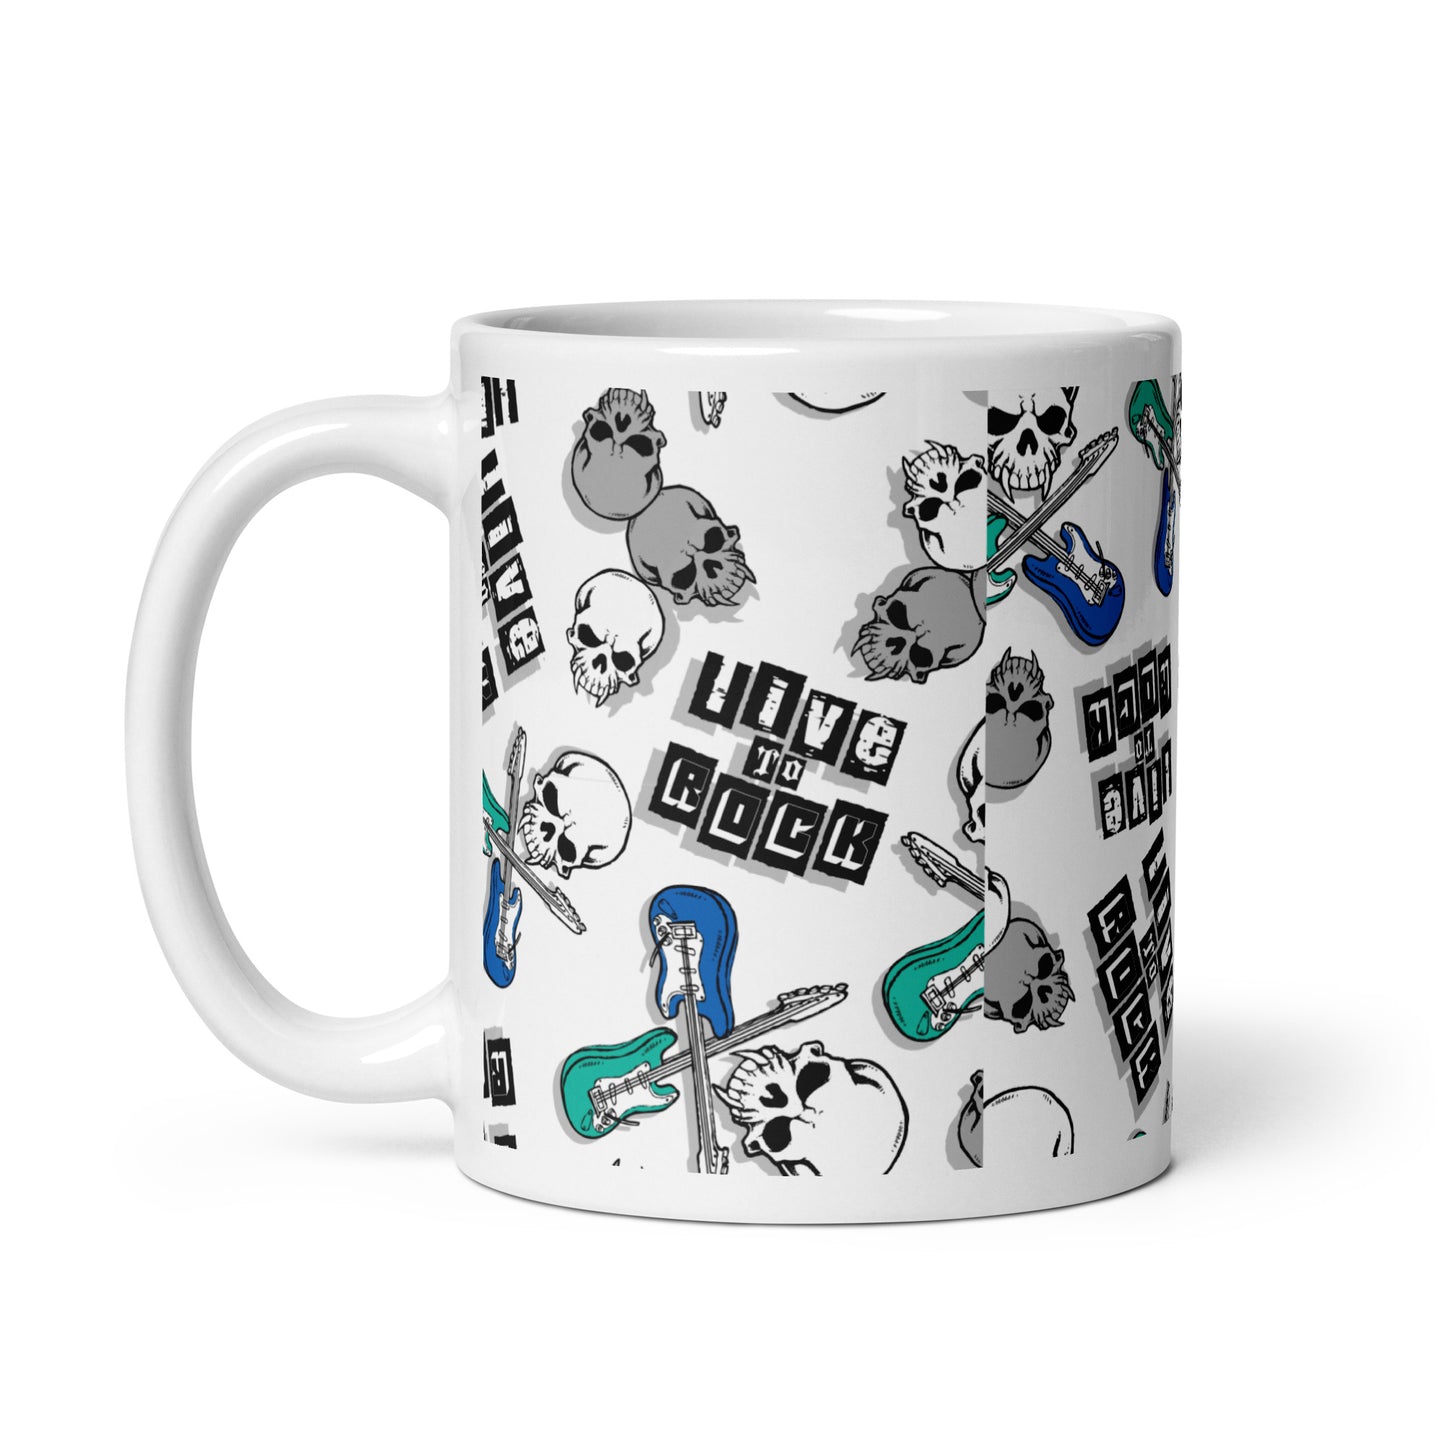 Coolest Coffee Mug